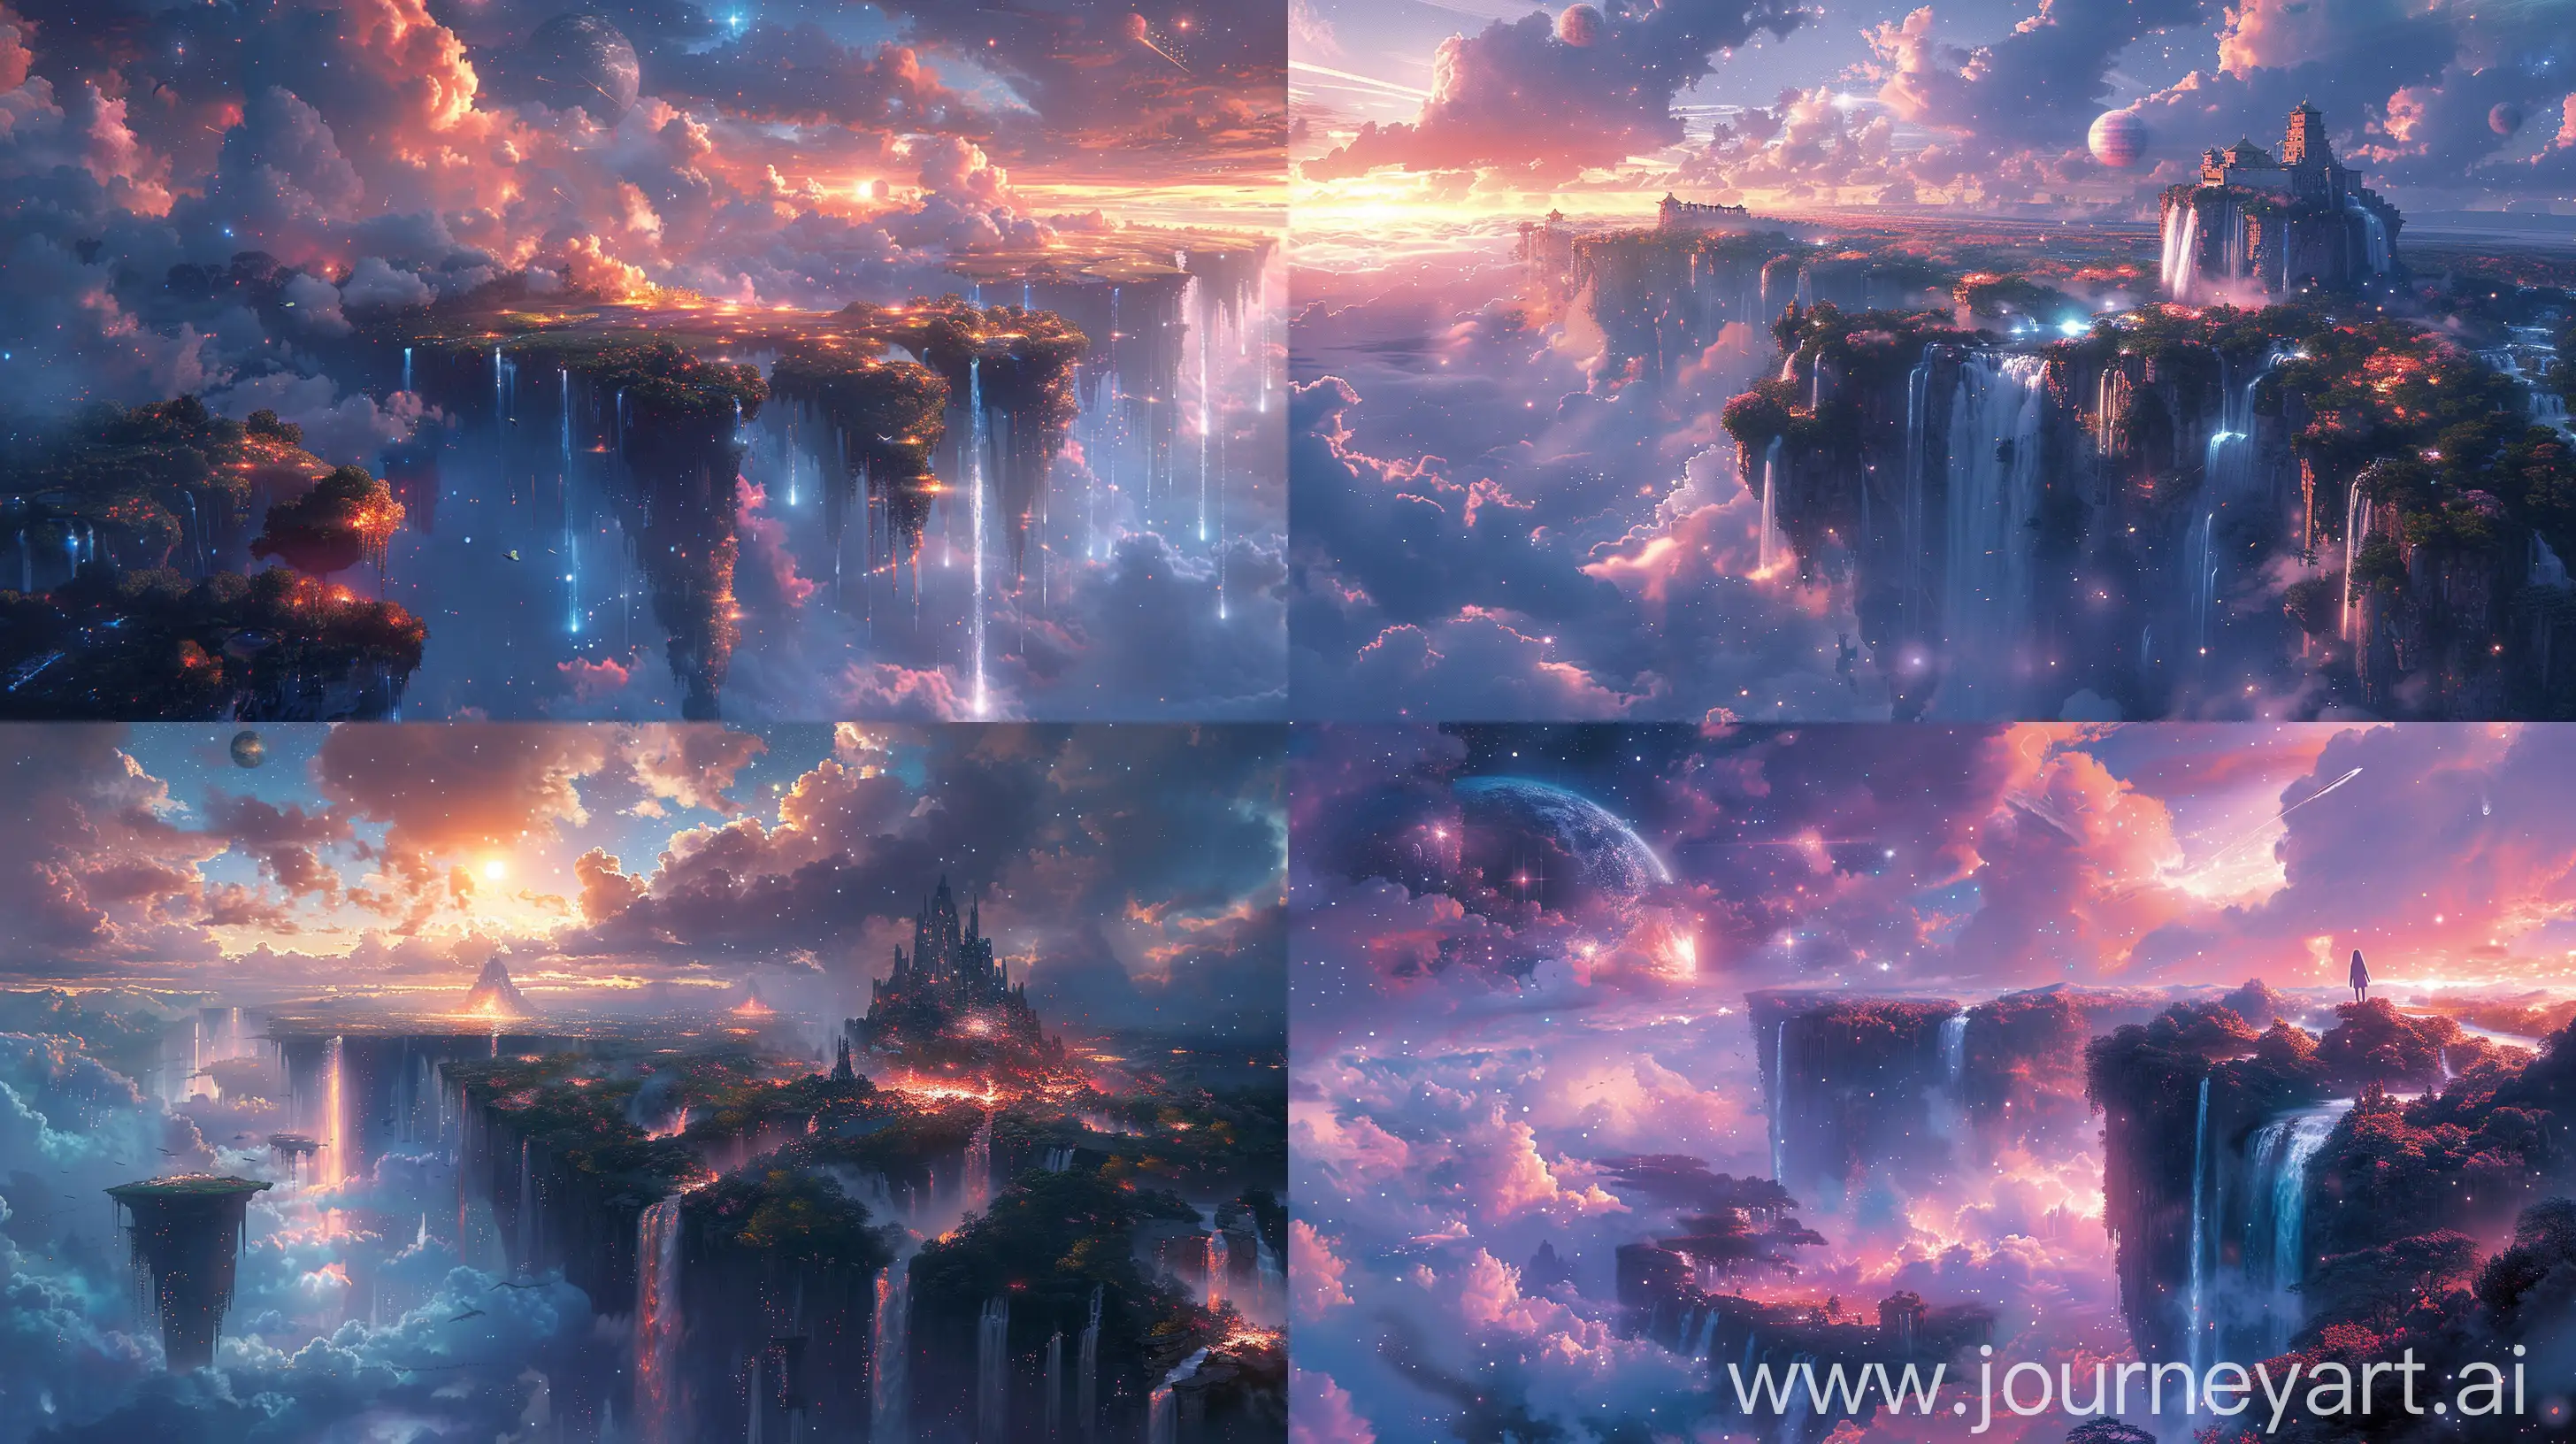 Ethereal-Fantasy-Landscape-Floating-Islands-and-Celestial-Bodies